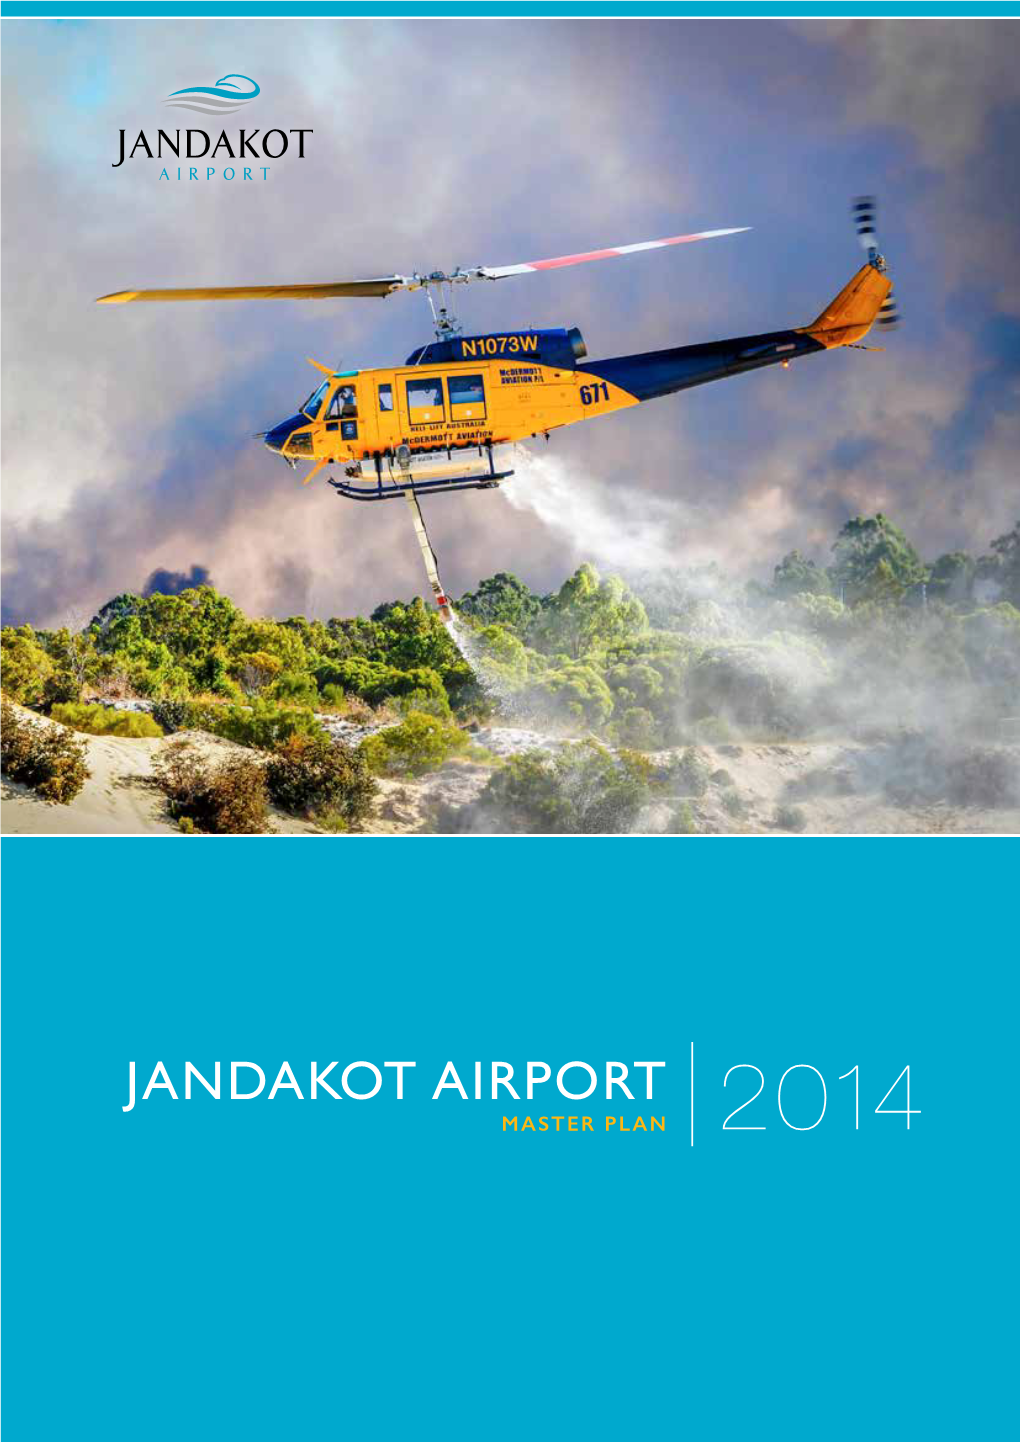 JANDAKOT AIRPORT MASTER PLAN 2014 Iii 6.6 Responsibility and Funding of Road Upgrades 44 6.7 Public Transportation 44 6.8 Car Parking 45 7